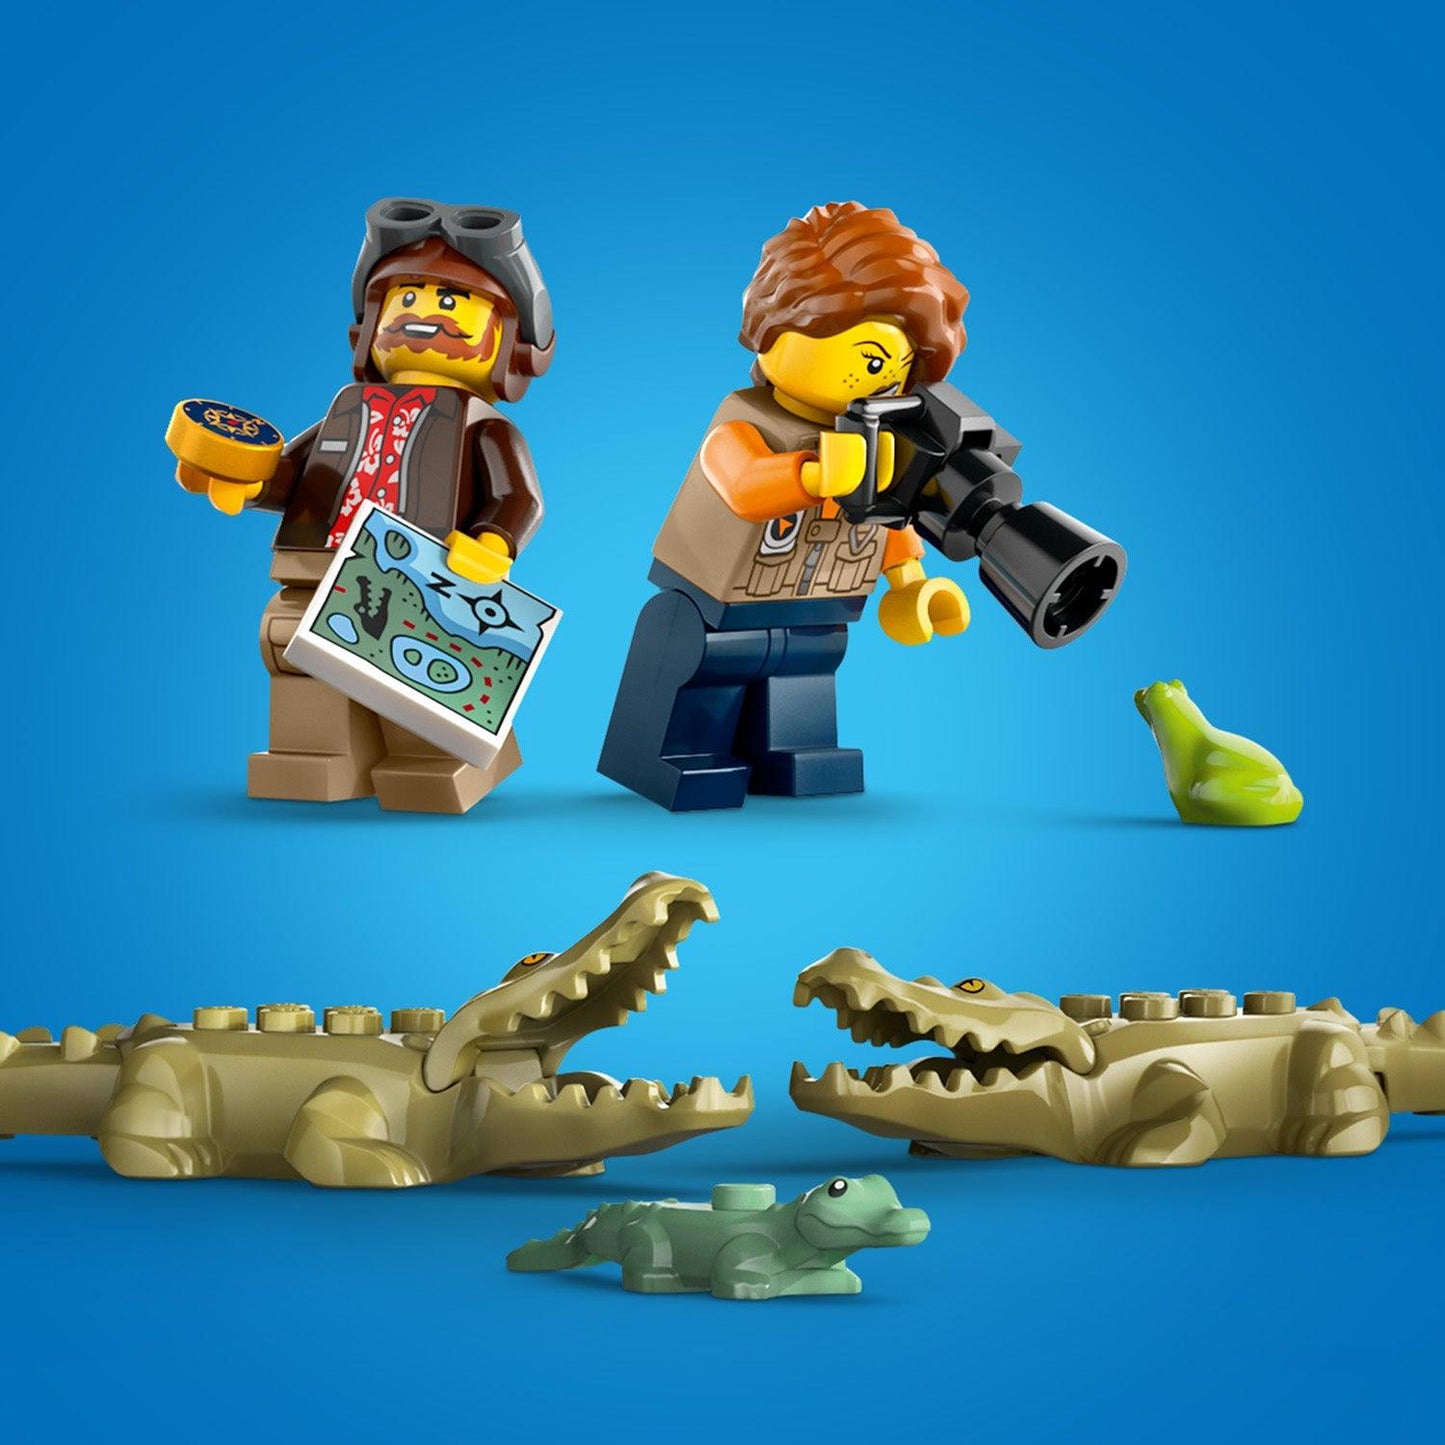 LEGO Jungleonderzoekers: watervliegtuig 60425 City (Pre-Order: verwacht juni) LEGO CITY @ 2TTOYS 2TTOYS €. 19.49